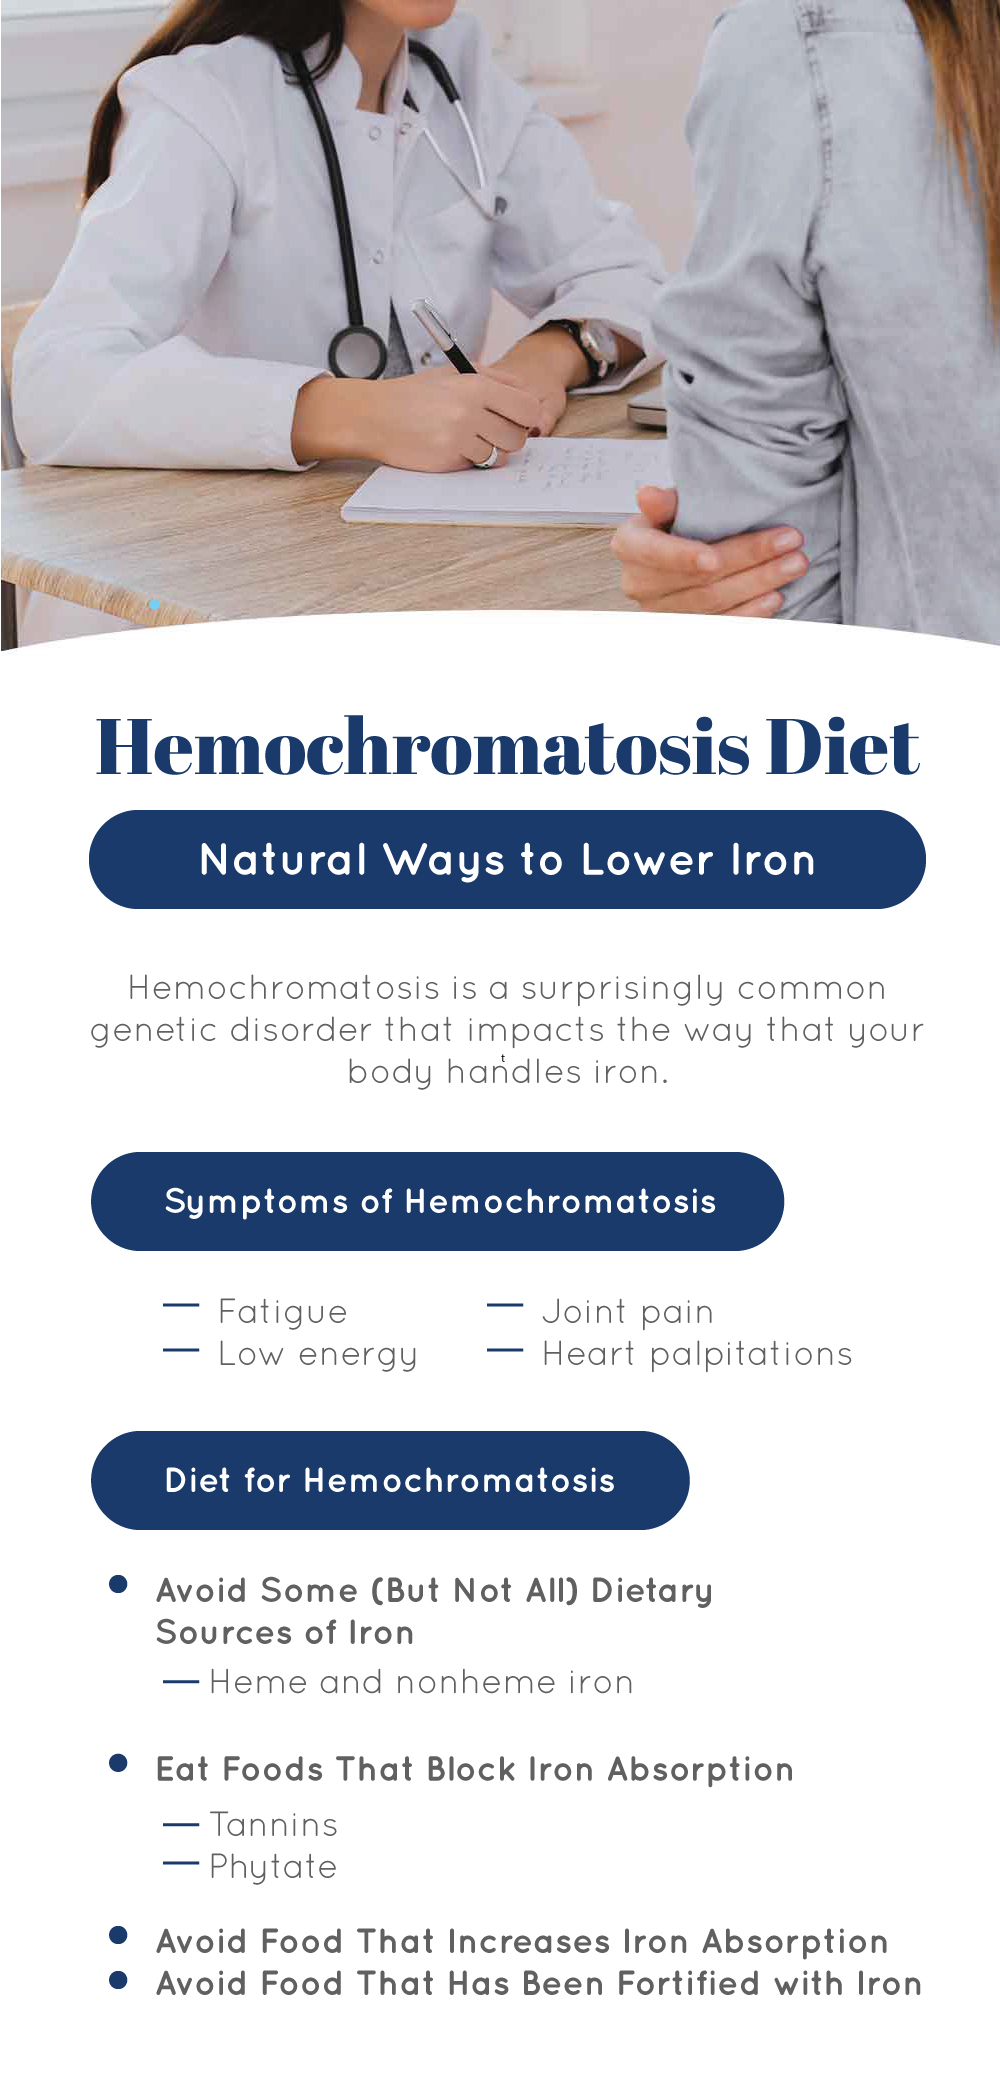 Hemochromatosis Diet and Symptoms of Hemochromatosis